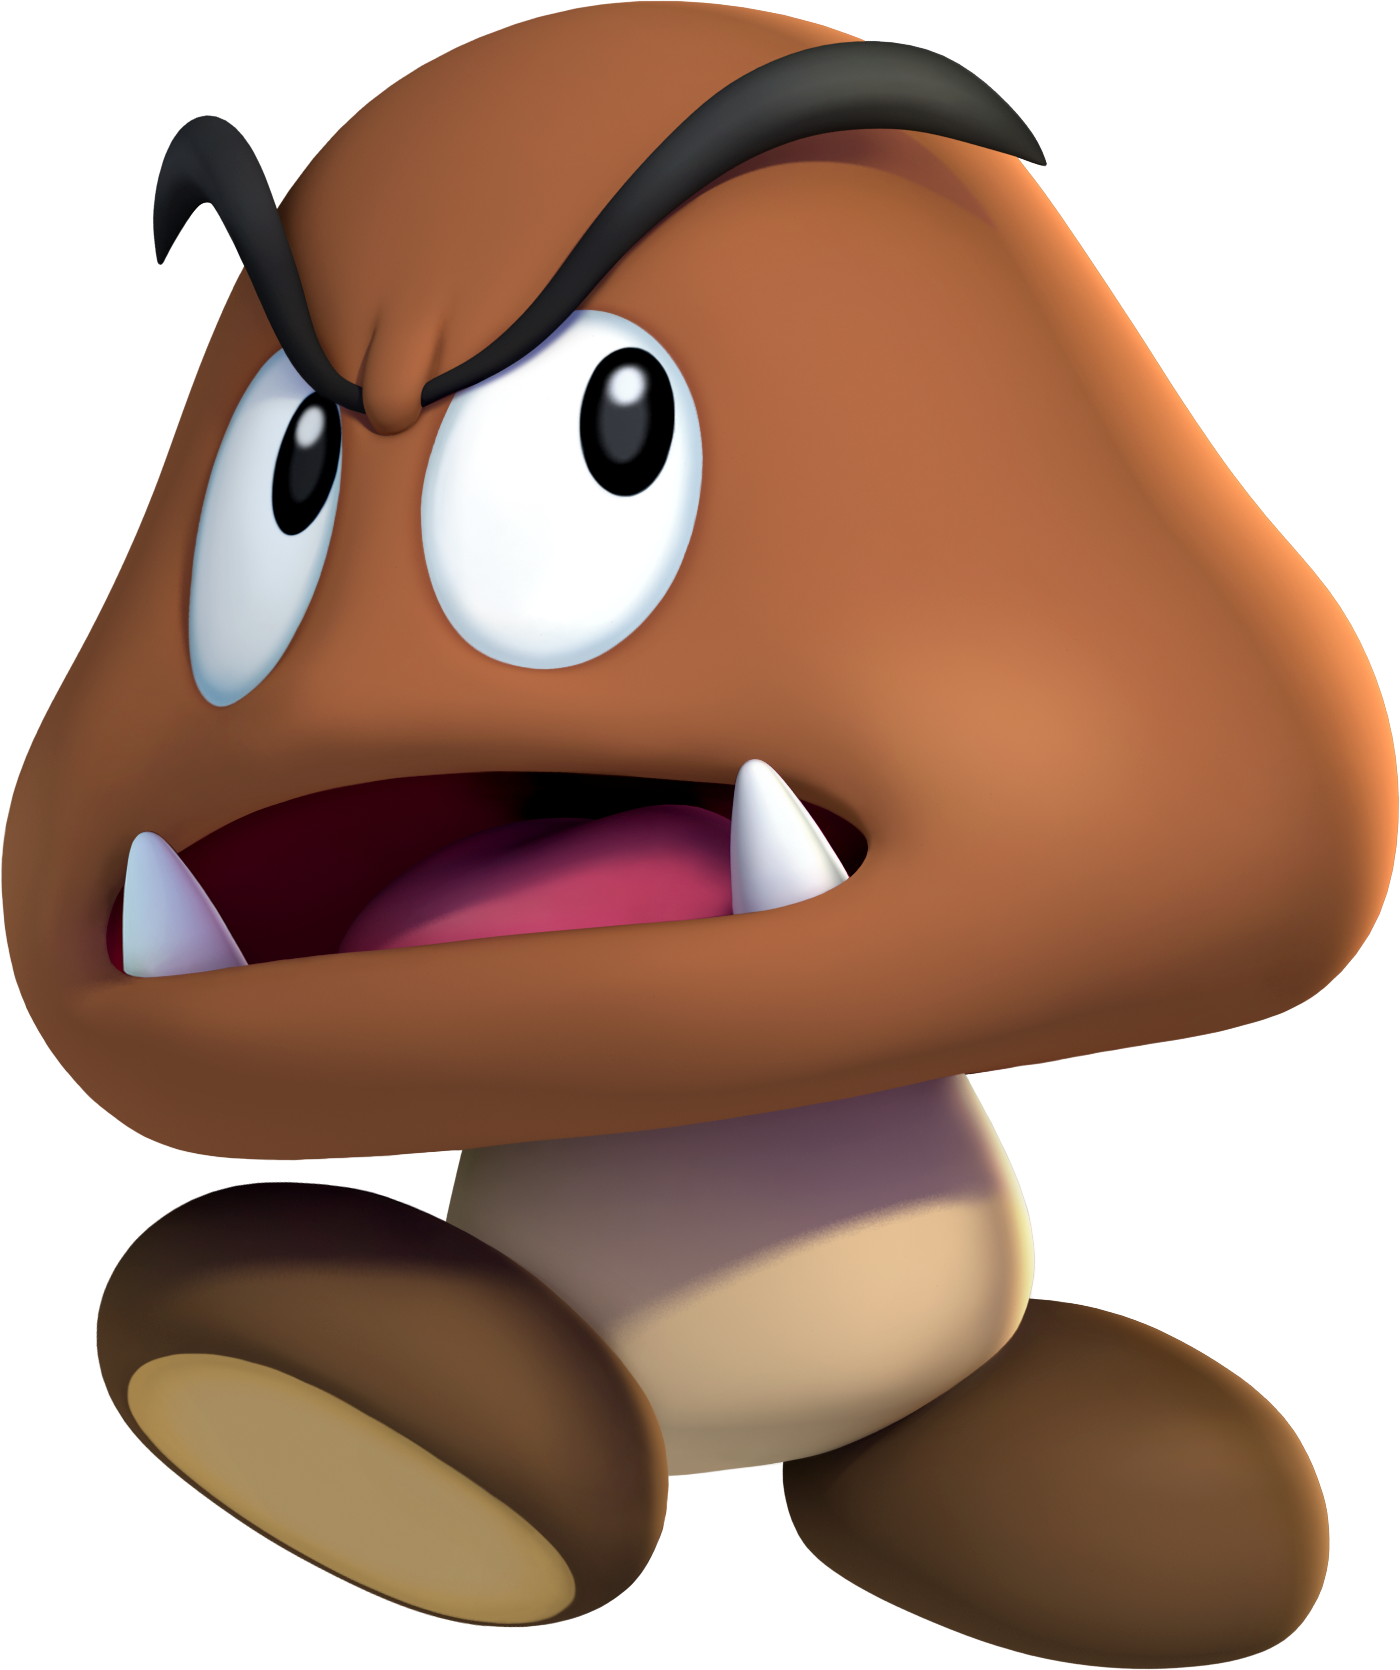 A Cartoon Character Of A Mushroom